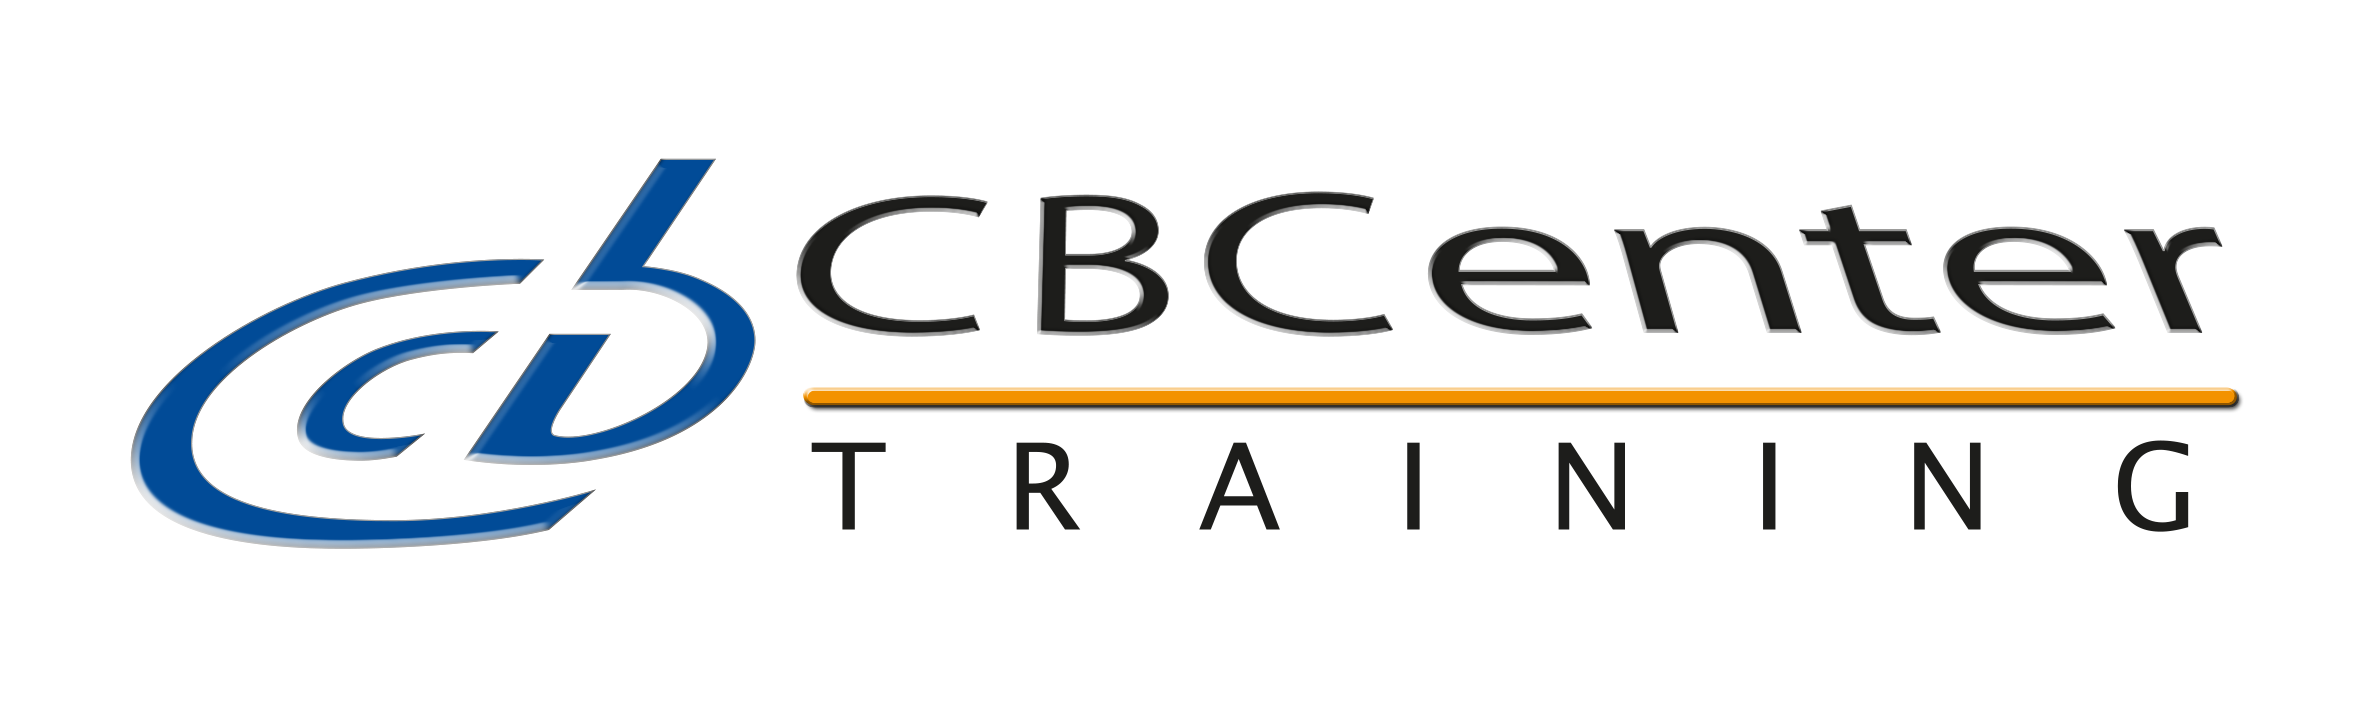 CBCenter Training